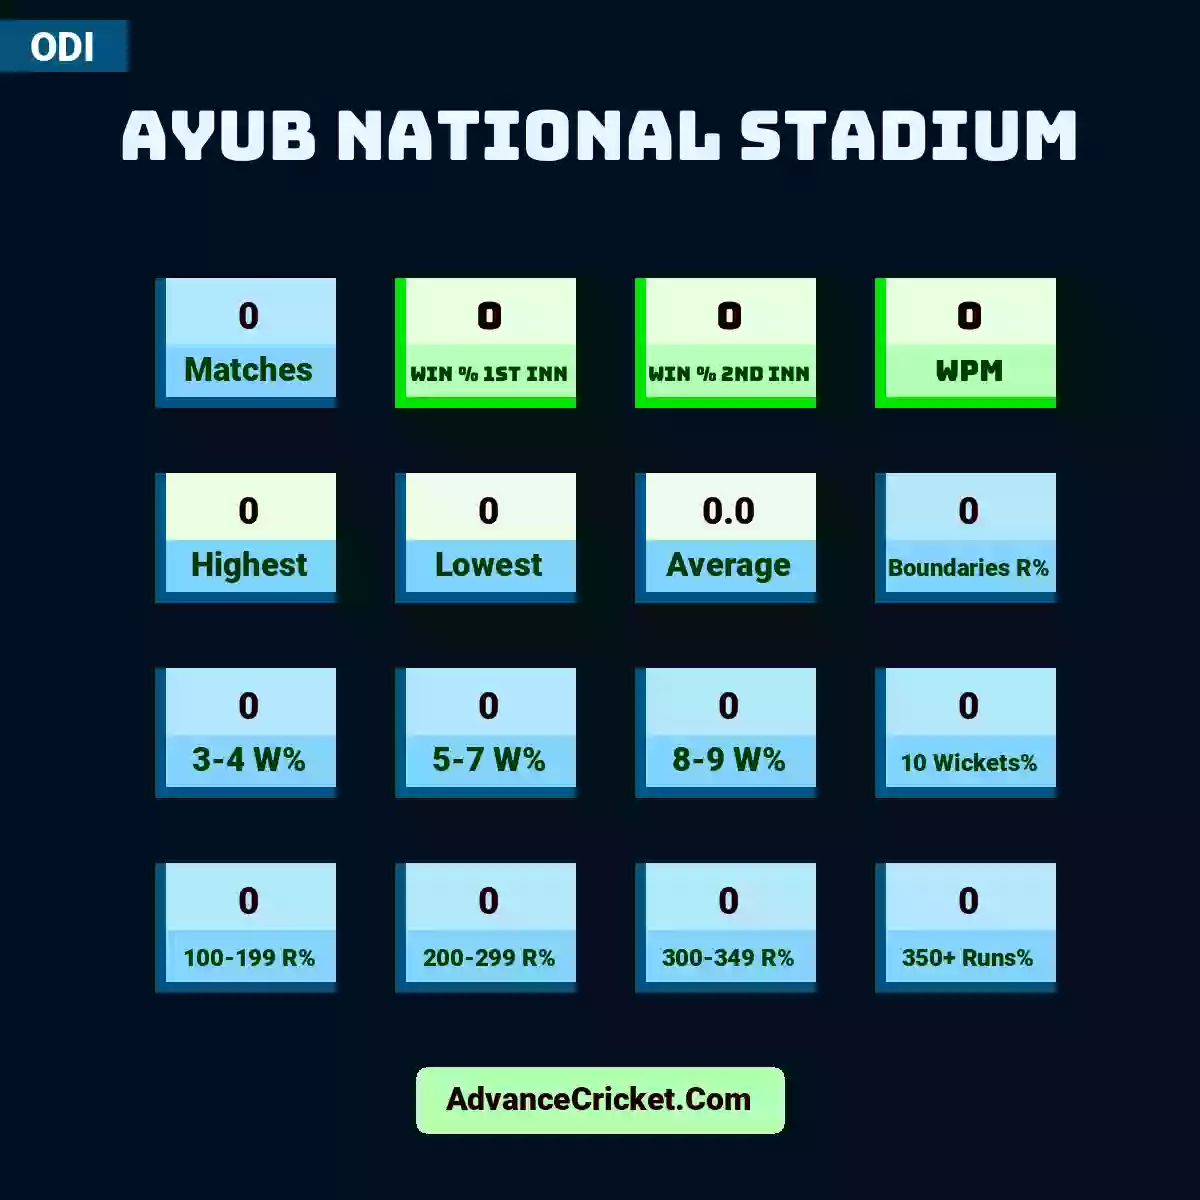 Image showing Ayub National Stadium with Matches: 0, Win % 1st Inn: 0, Win % 2nd Inn: 0, WPM: 0, Highest: 0, Lowest: 0, Average: 0.0, Boundaries R%: 0, 3-4 W%: 0, 5-7 W%: 0, 8-9 W%: 0, 10 Wickets%: 0, 100-199 R%: 0, 200-299 R%: 0, 300-349 R%: 0, 350+ Runs%: 0.